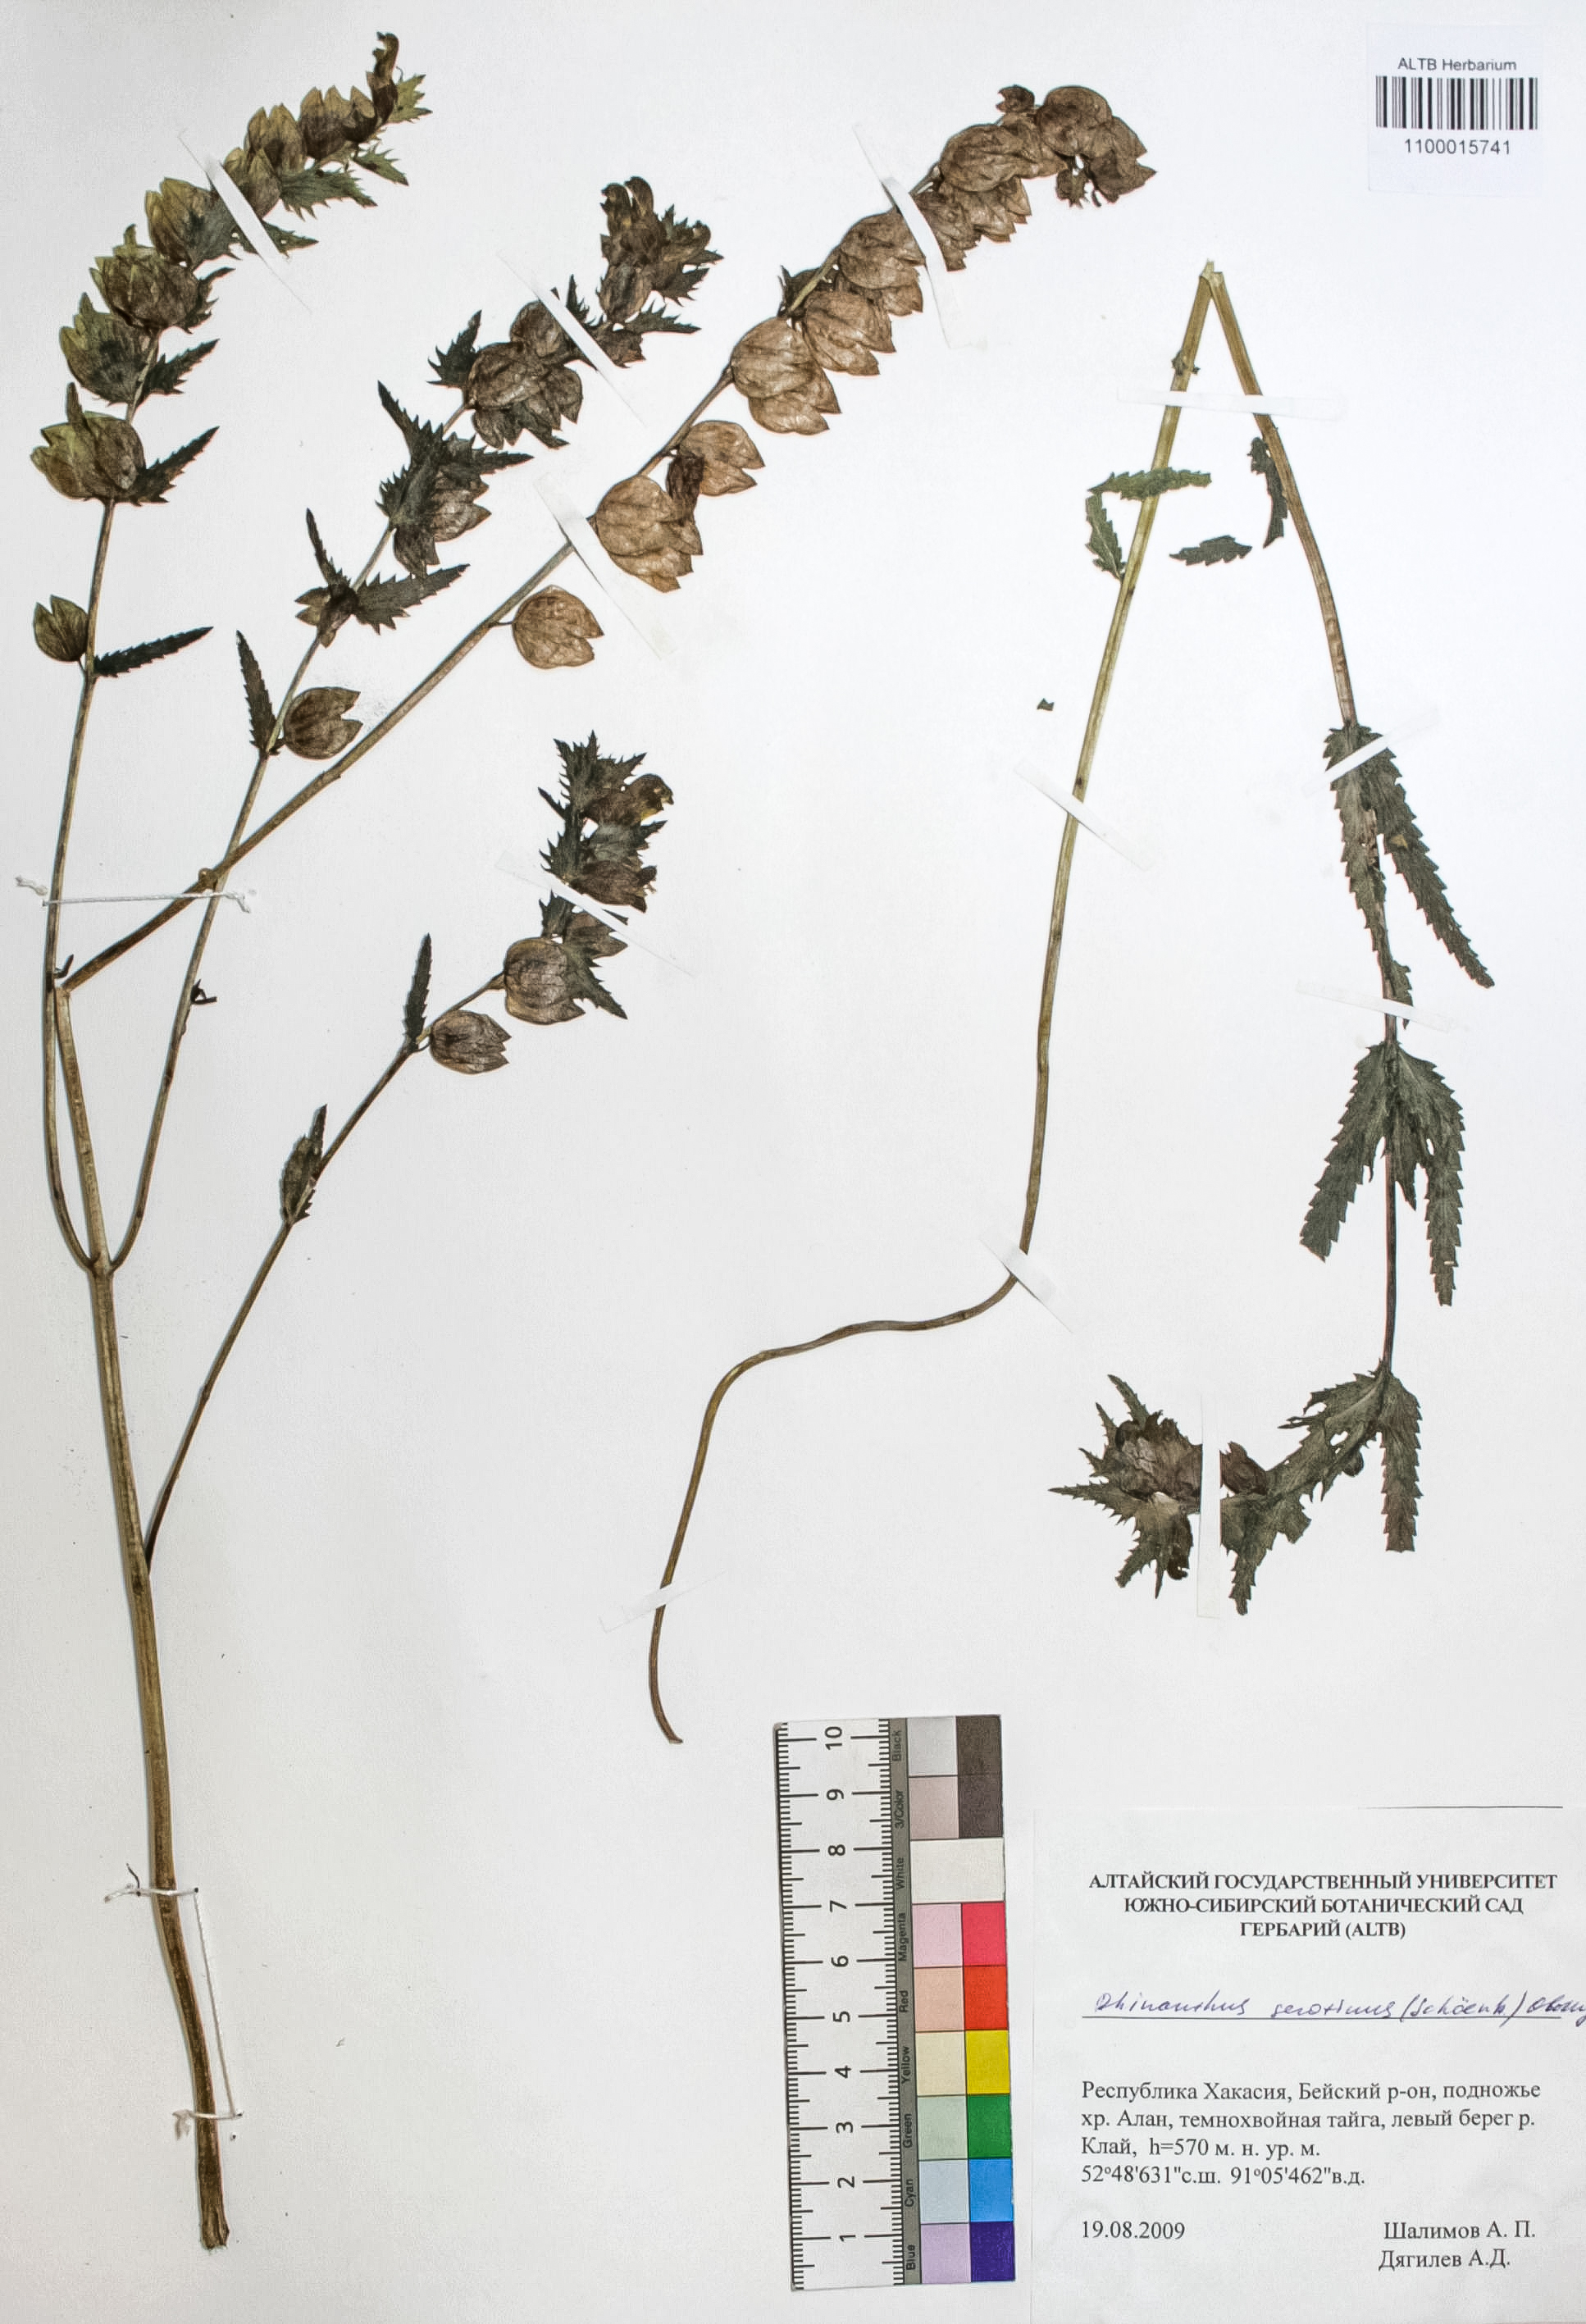 Rhinanthus serotinus (Schonh.) Oborny